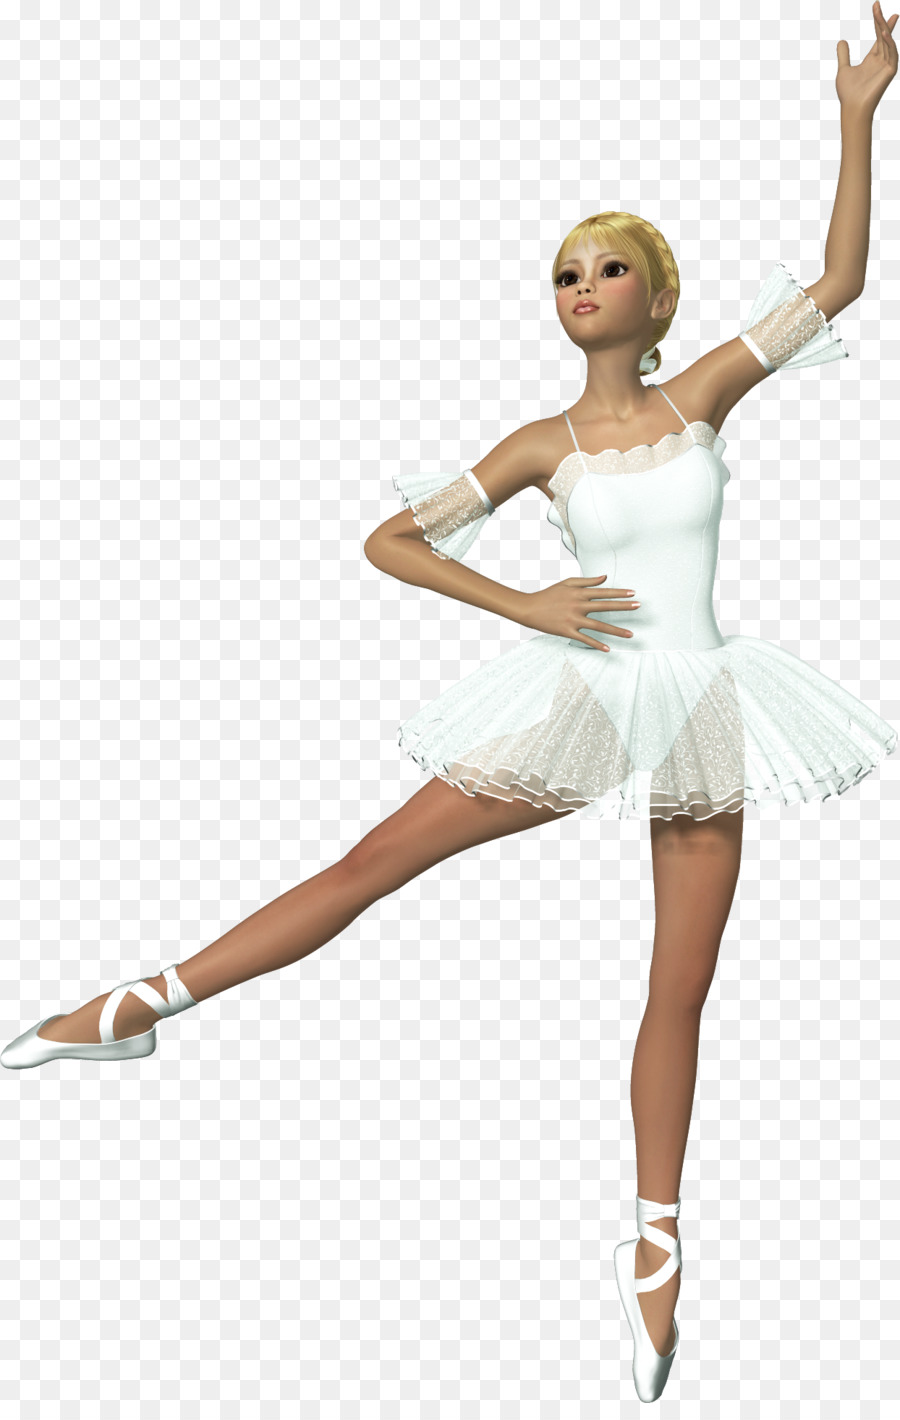 Ballet Dancer Clip art - Ballerina Cliparts png download - 1244*1939 - Free Transparent  png Download.